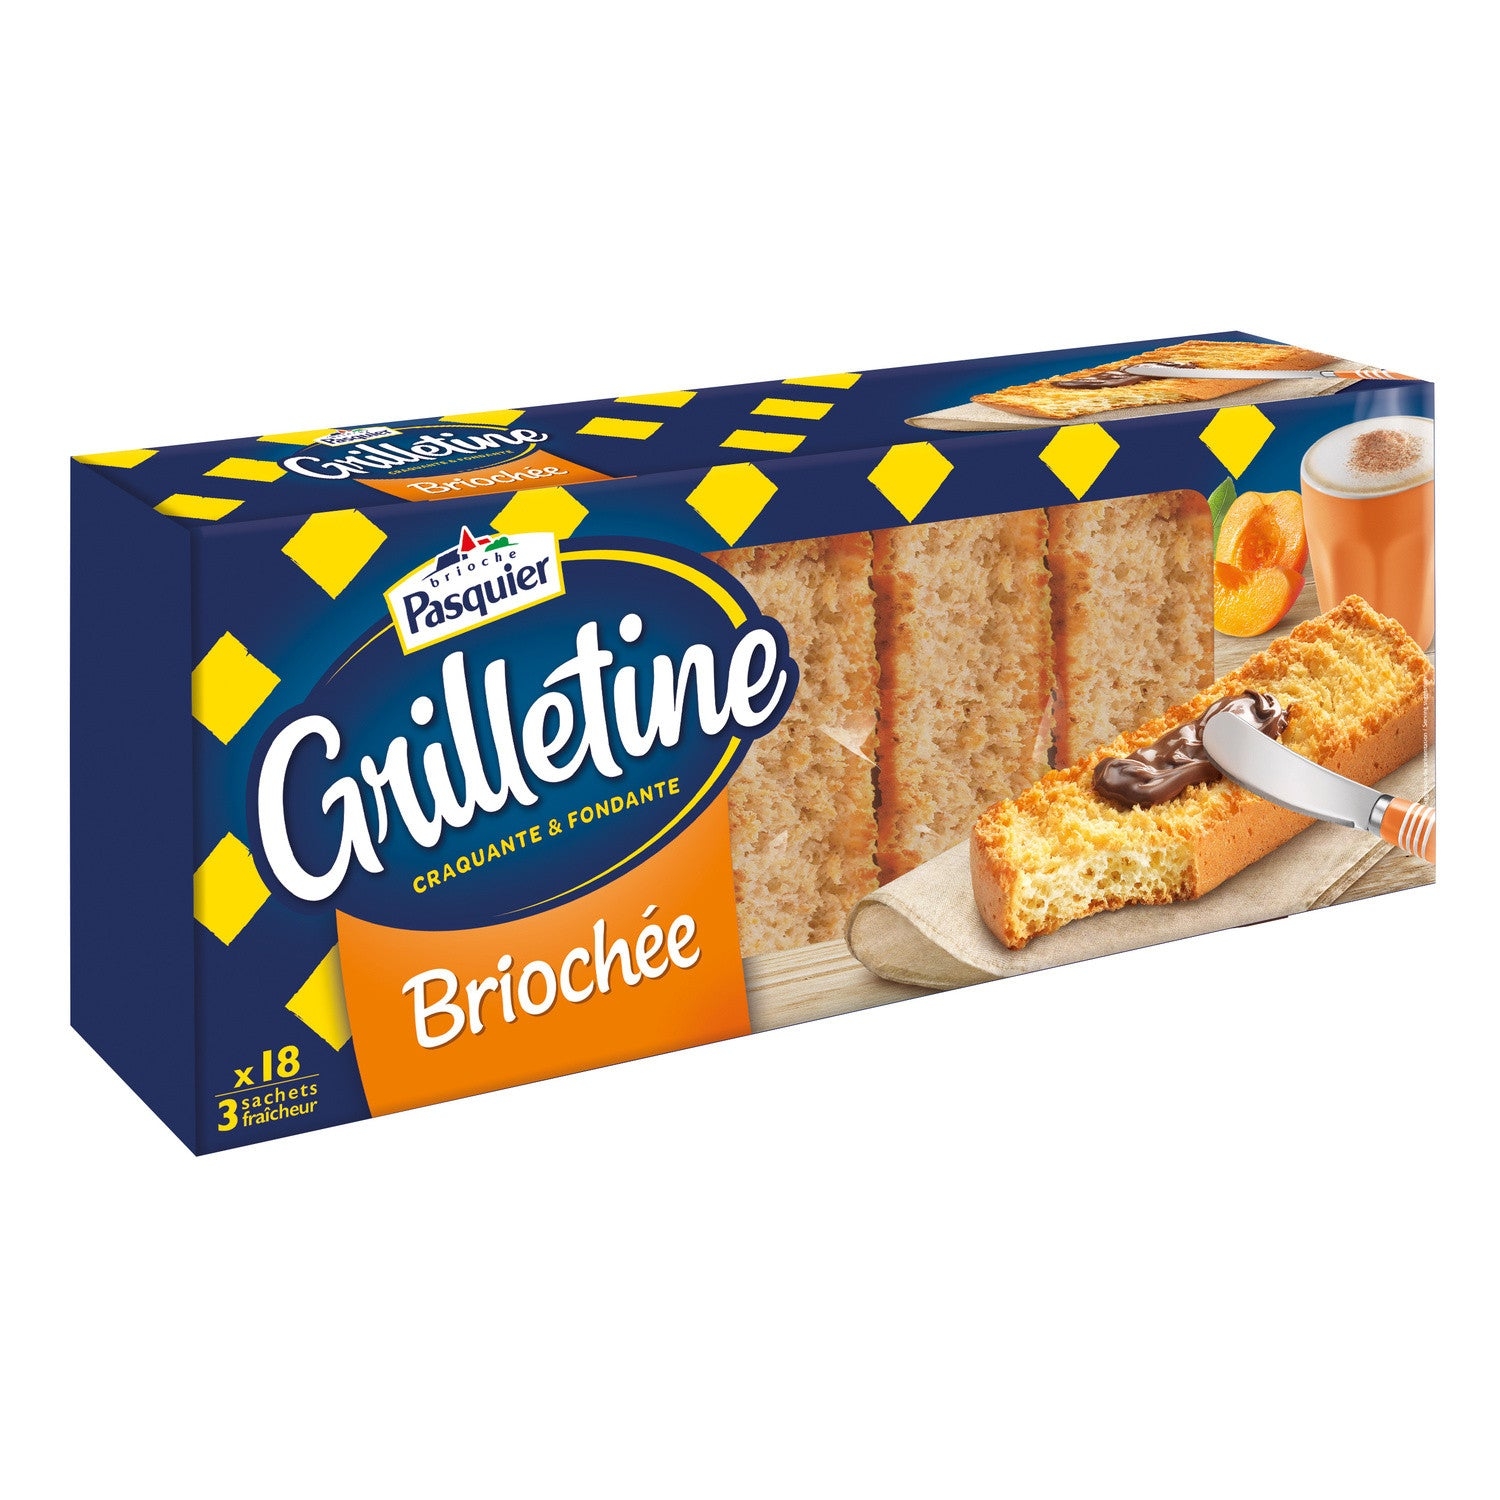 Grillettines biscottes briochées pur beurre x 18 – Butter rectangular French toasts 3×6 – Pasquier, 255g – Chanteroy – Le Vacherin Deli